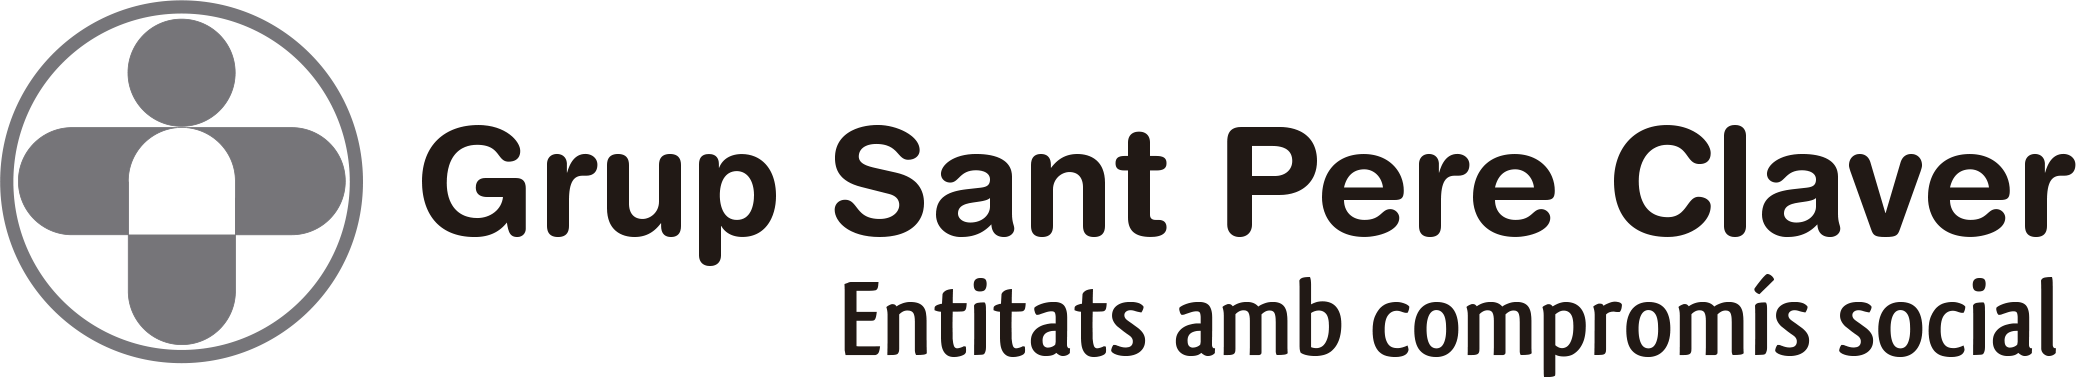 Grup Sant Pere Claver logo